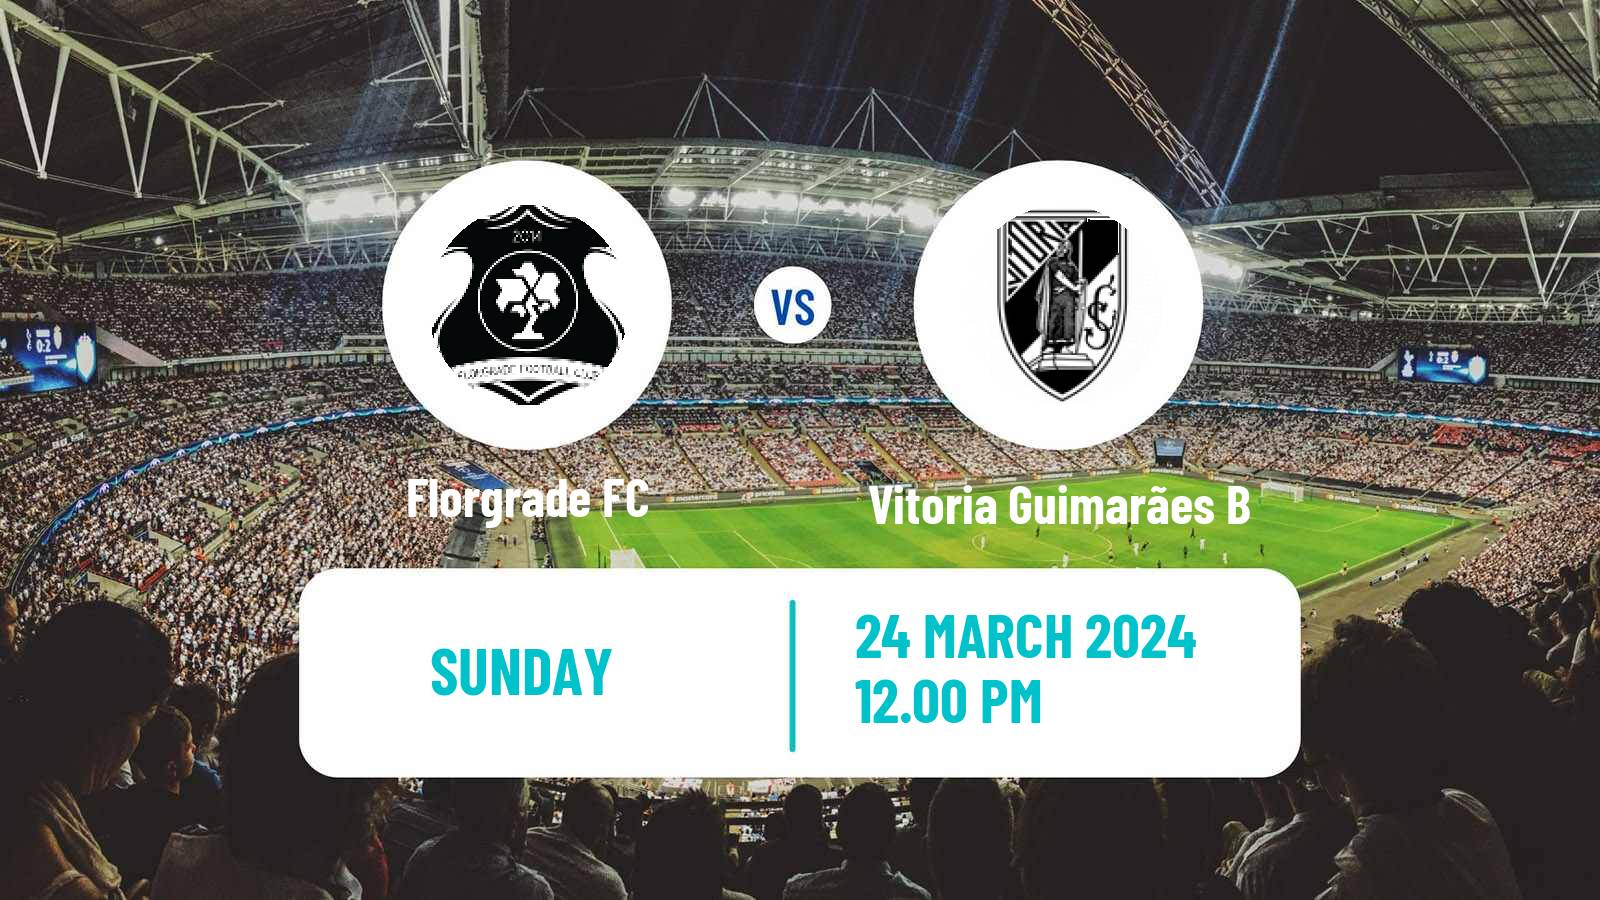 Soccer Campeonato de Portugal Florgrade - Vitoria Guimarães B